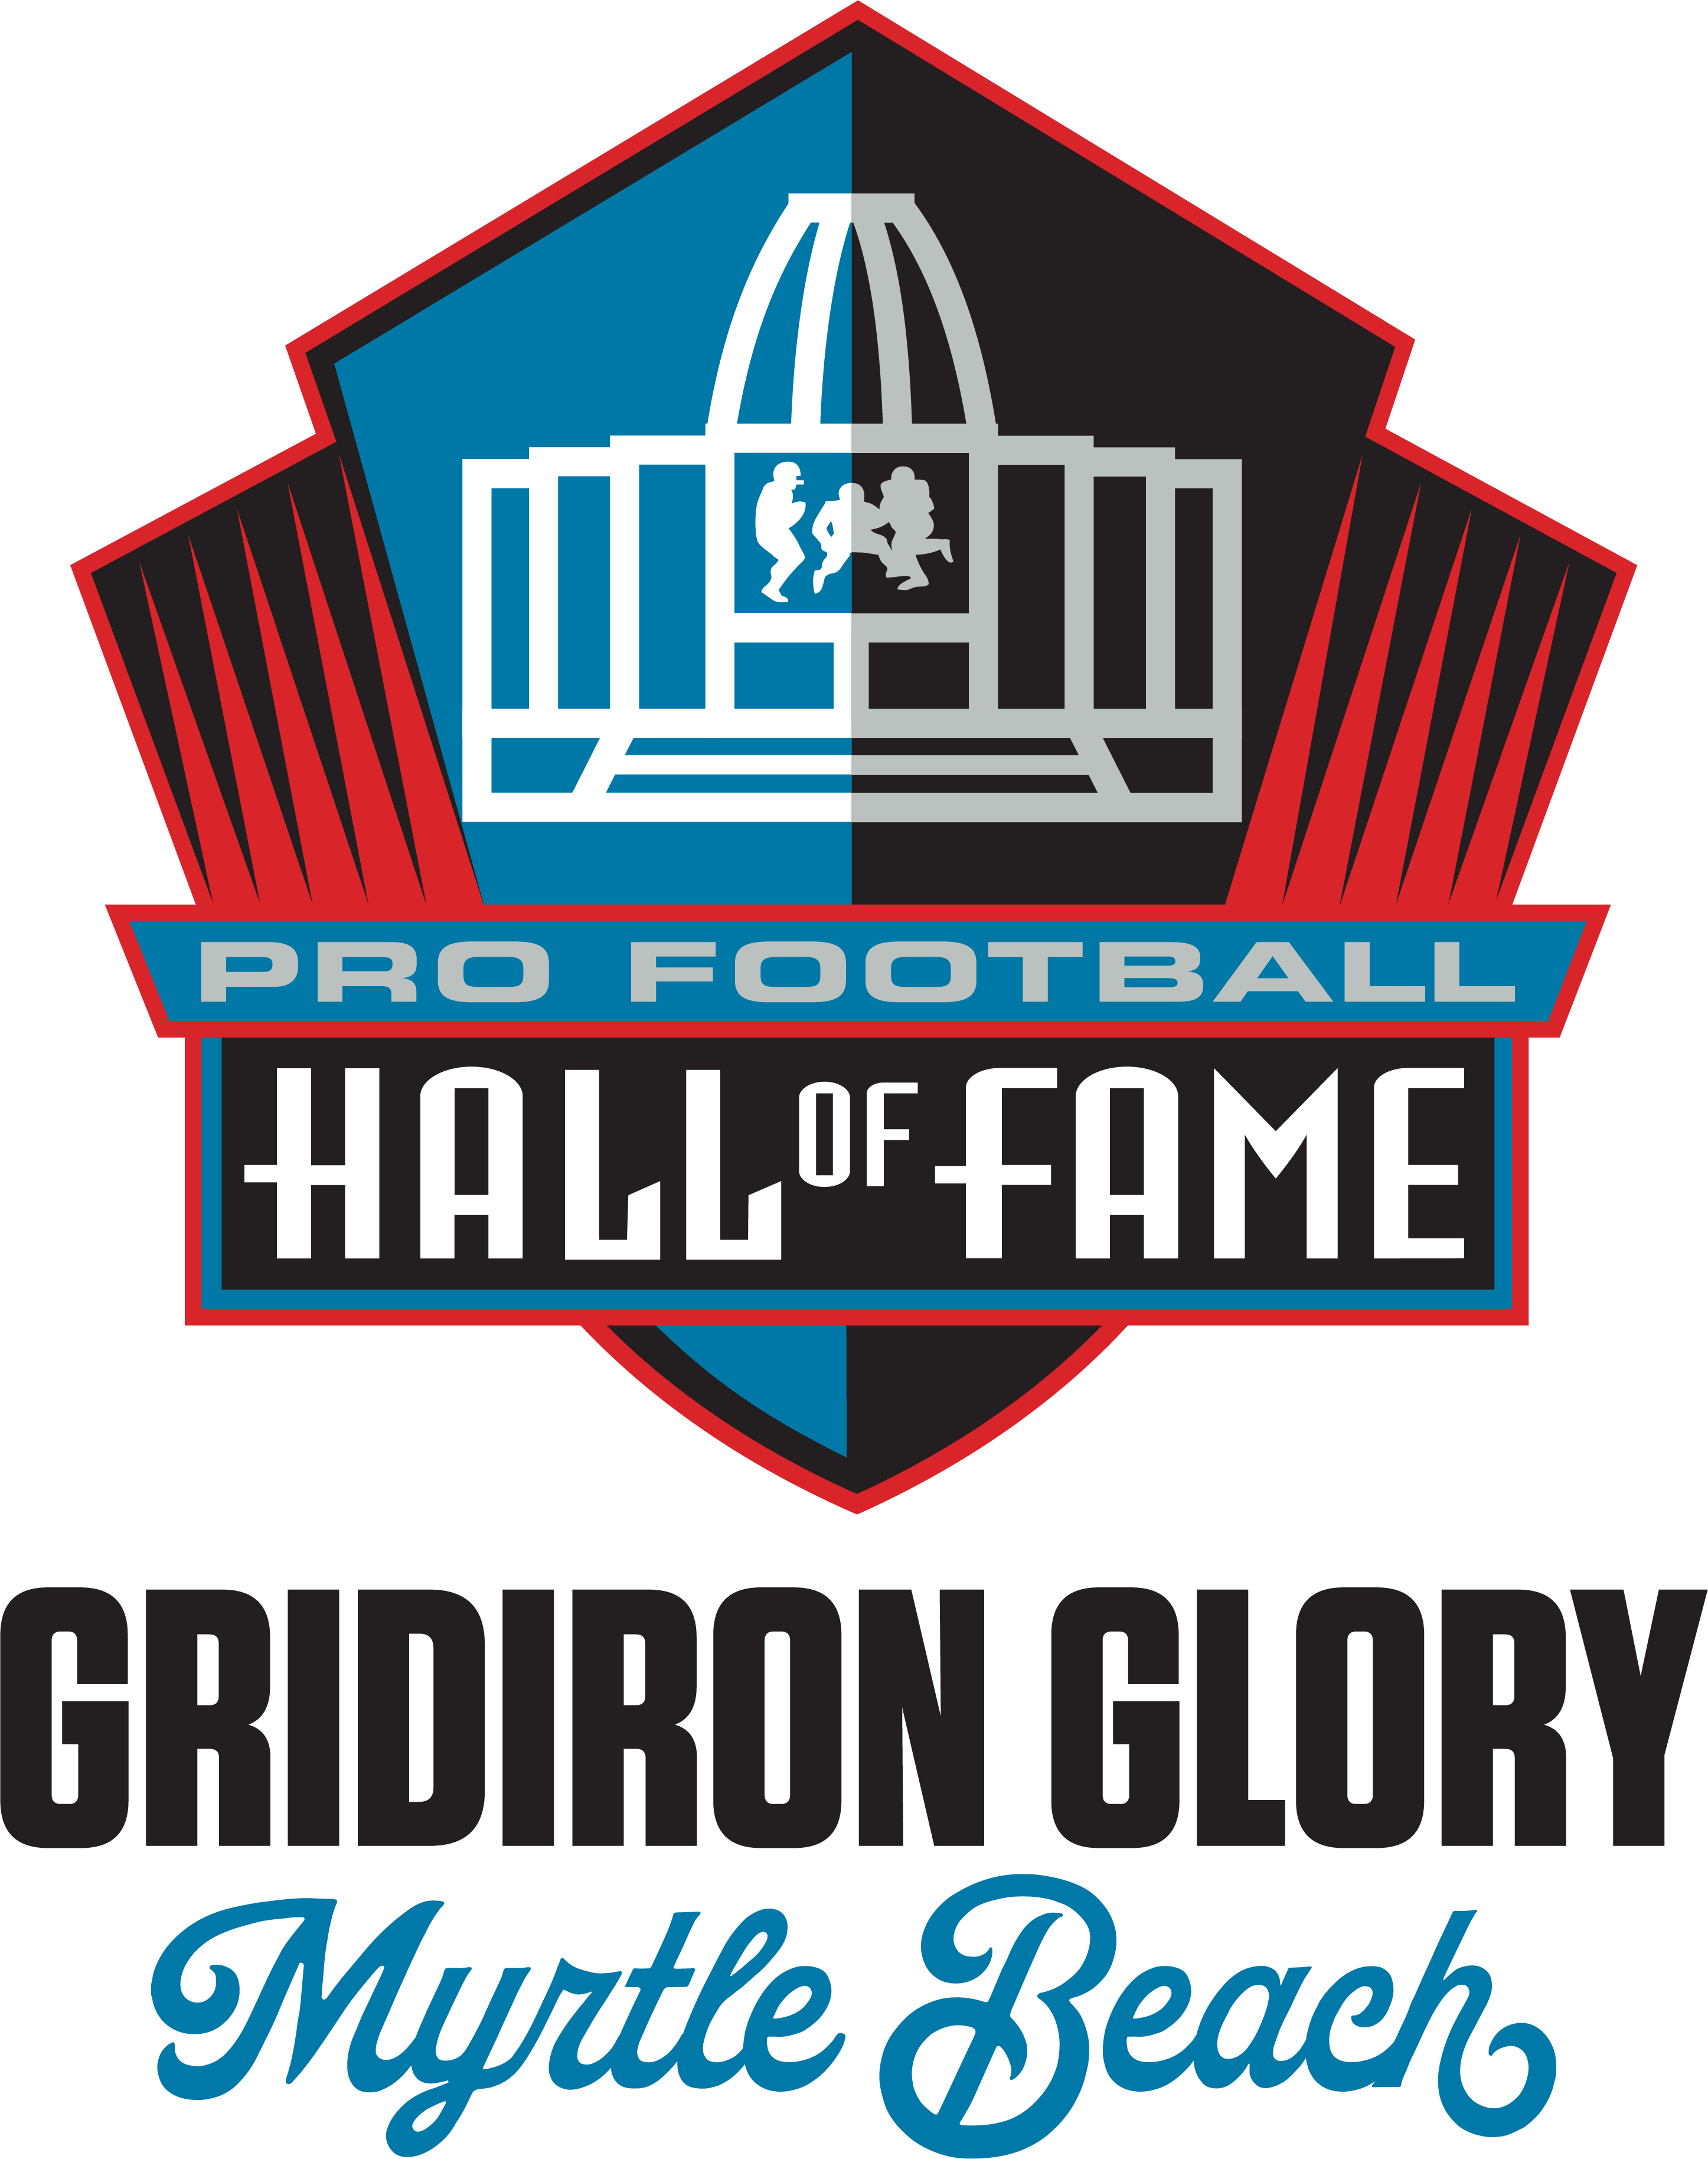 Pro Football Hall of Fame Gridiron Glory Myrtle Beach